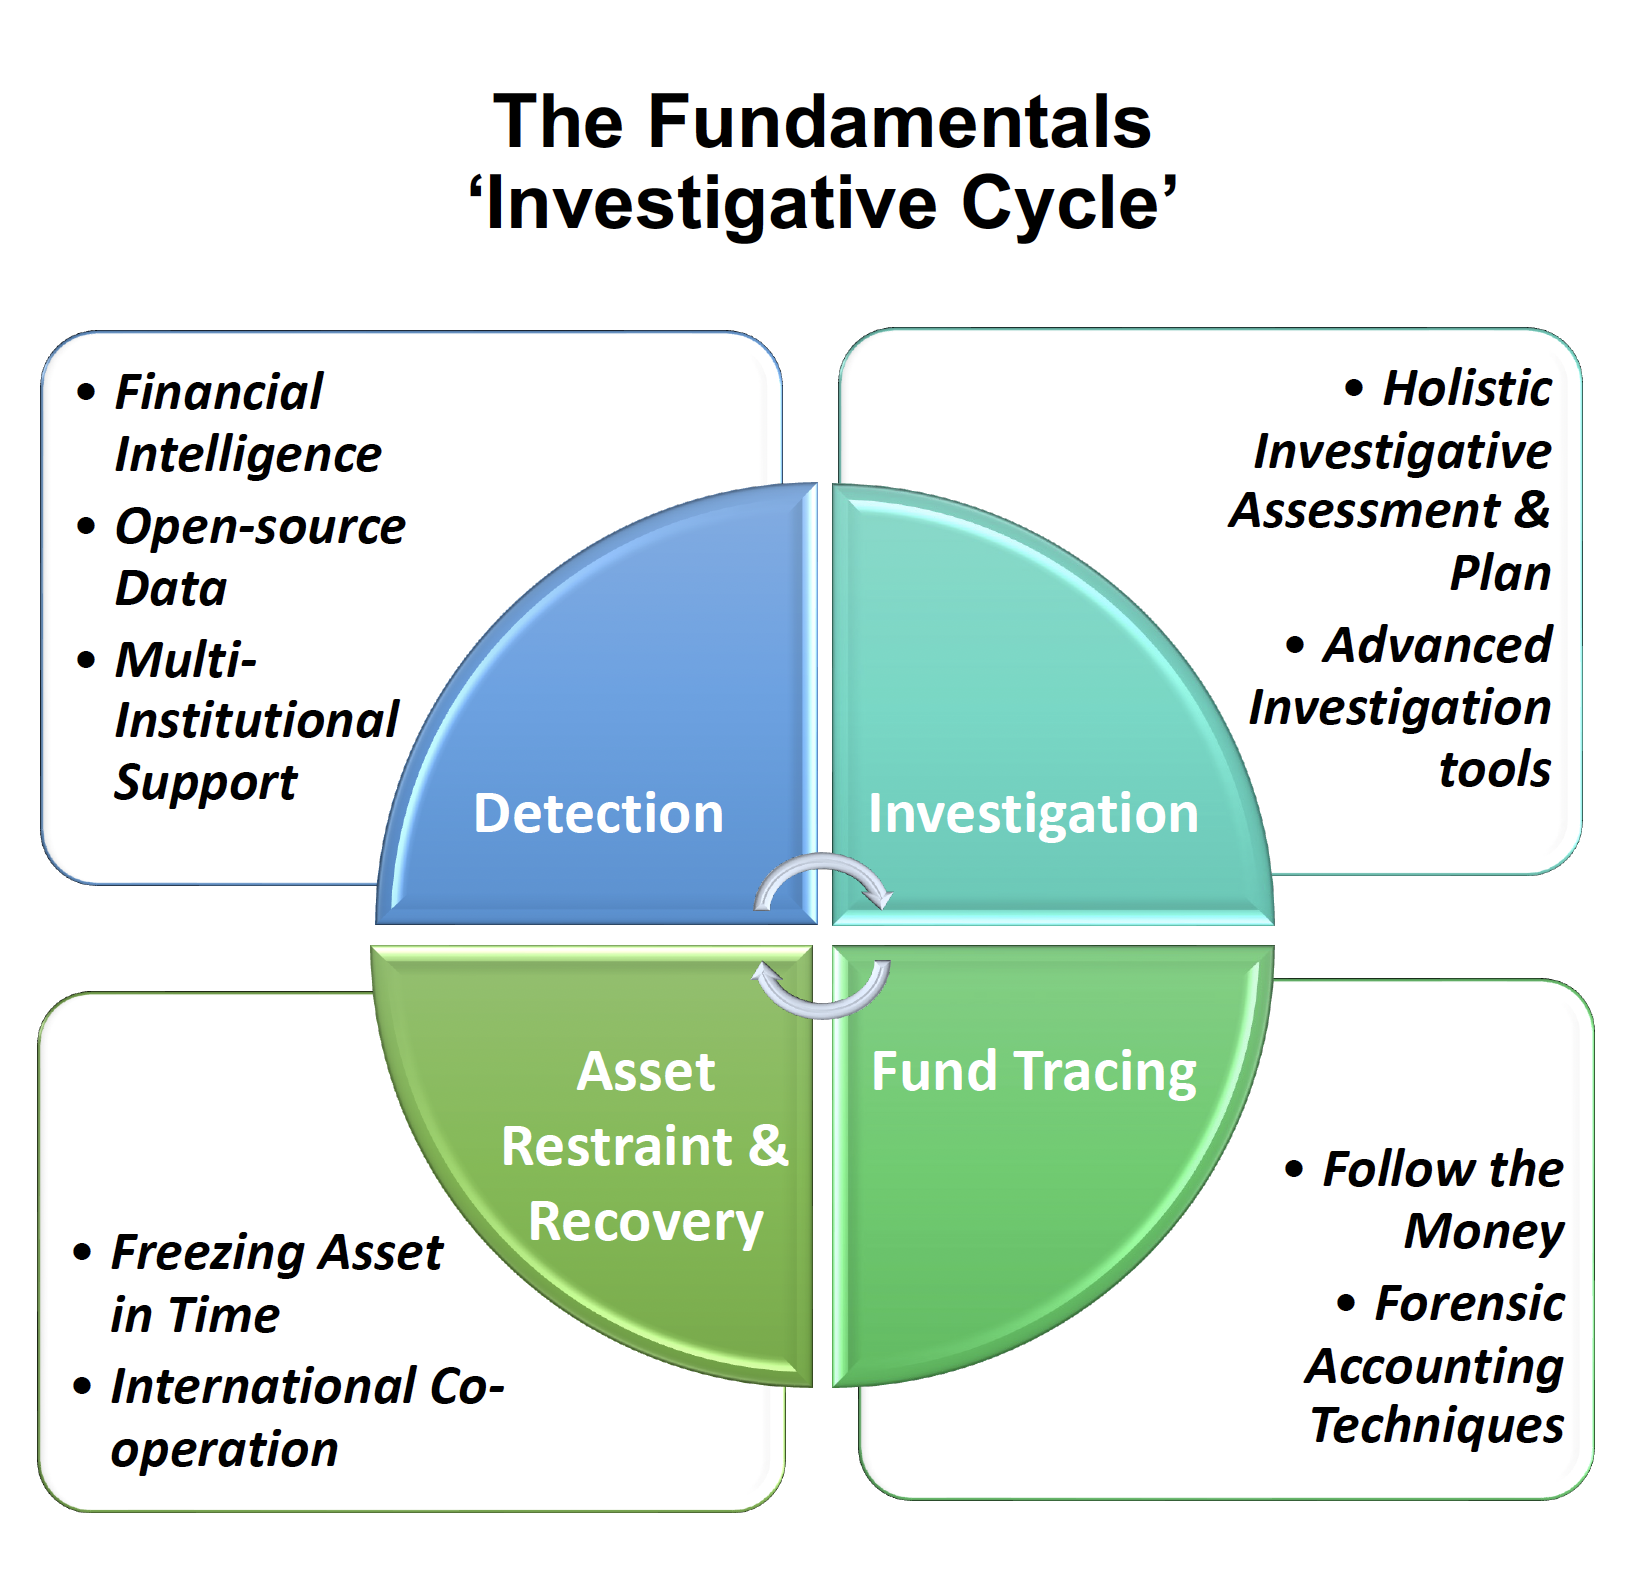 Figure: The Fundamentals ‘Investigative Cycle’